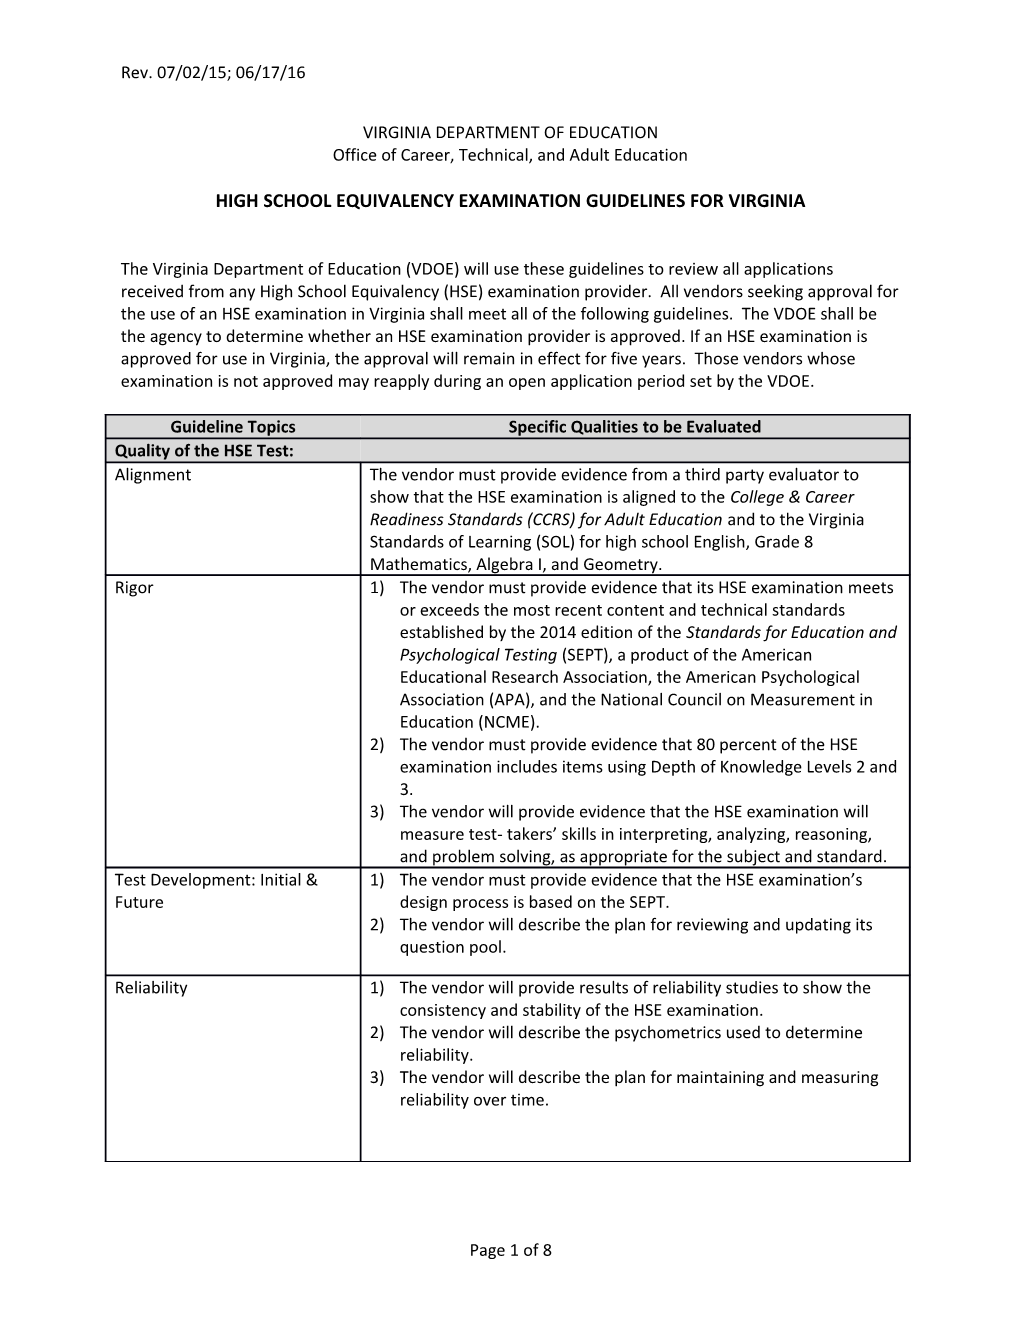 High School Equivalency Examination Guidelines for Virginia